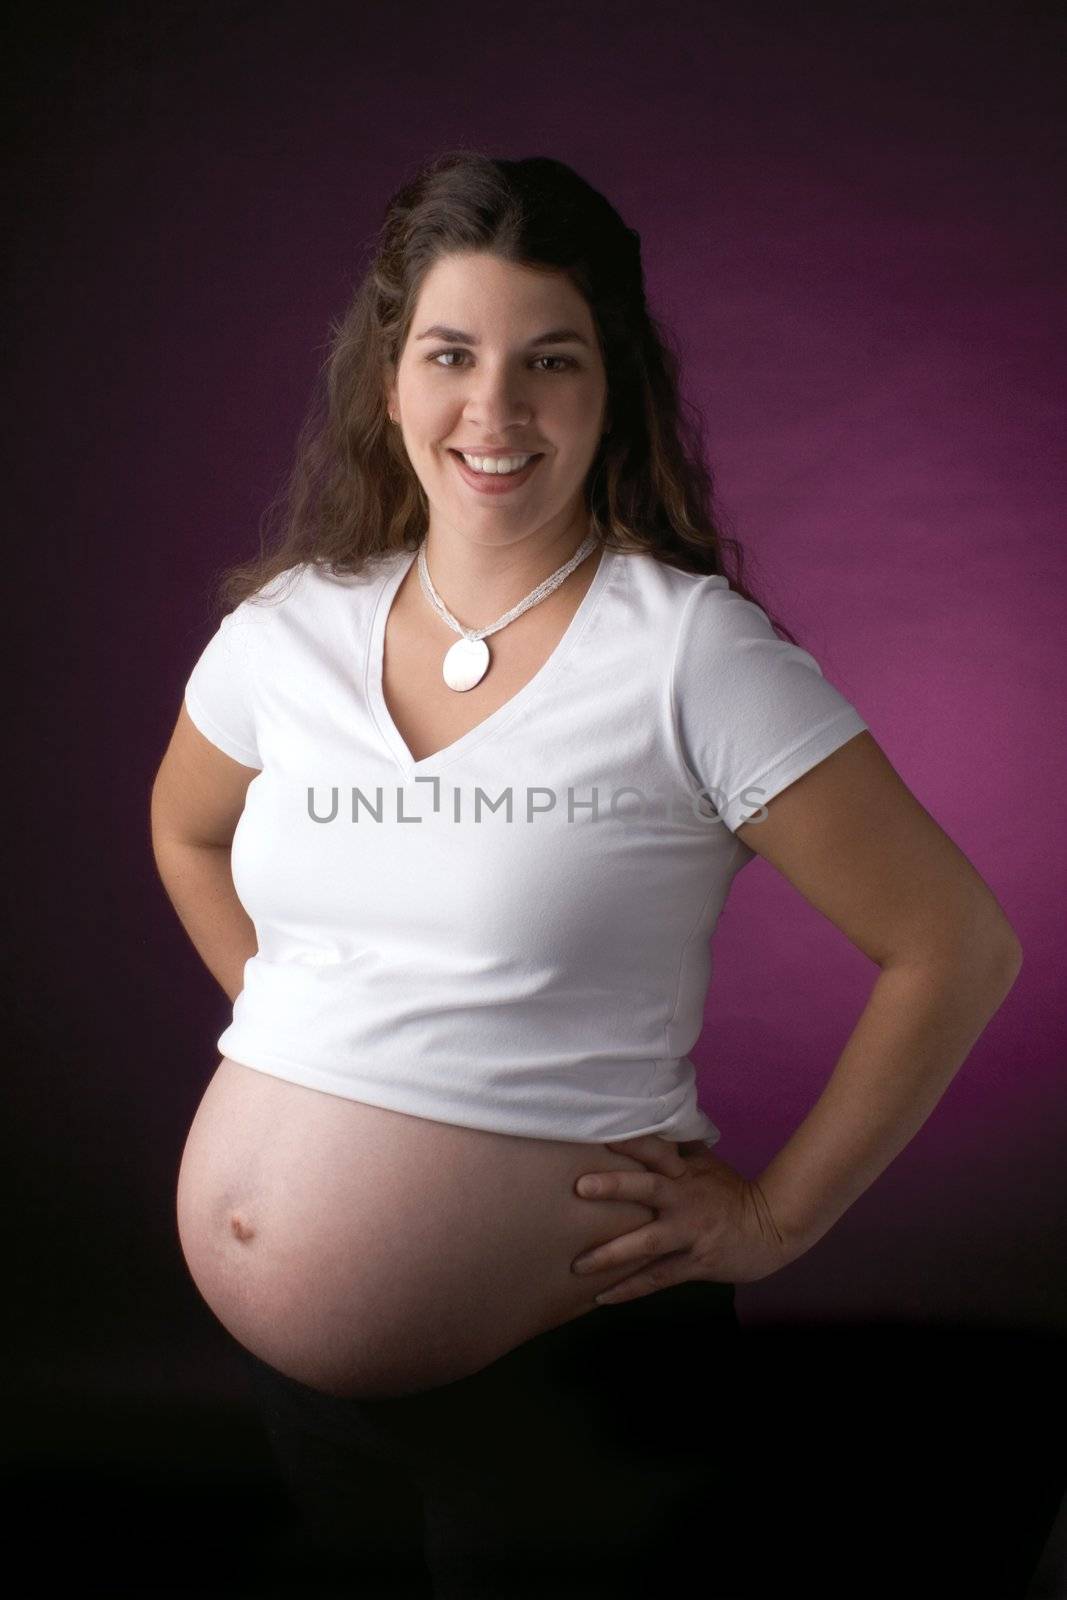 Smiling pregnancy by mypstudio